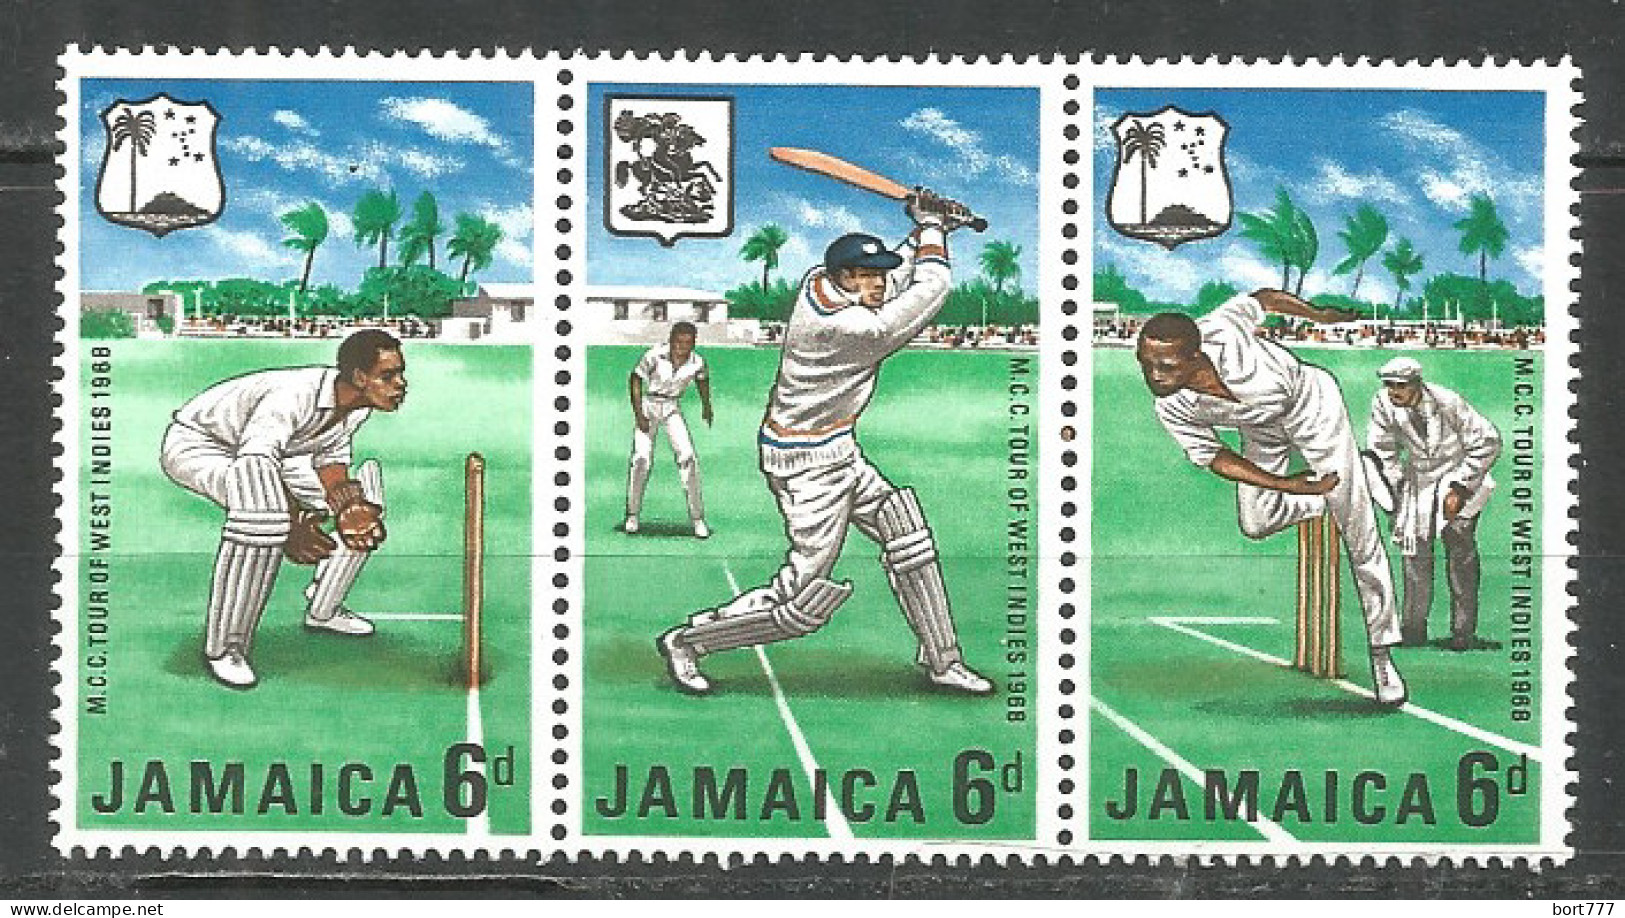 Jamaica 1968 Mint Stamps Set MNH (**) Baseball - Base-Ball